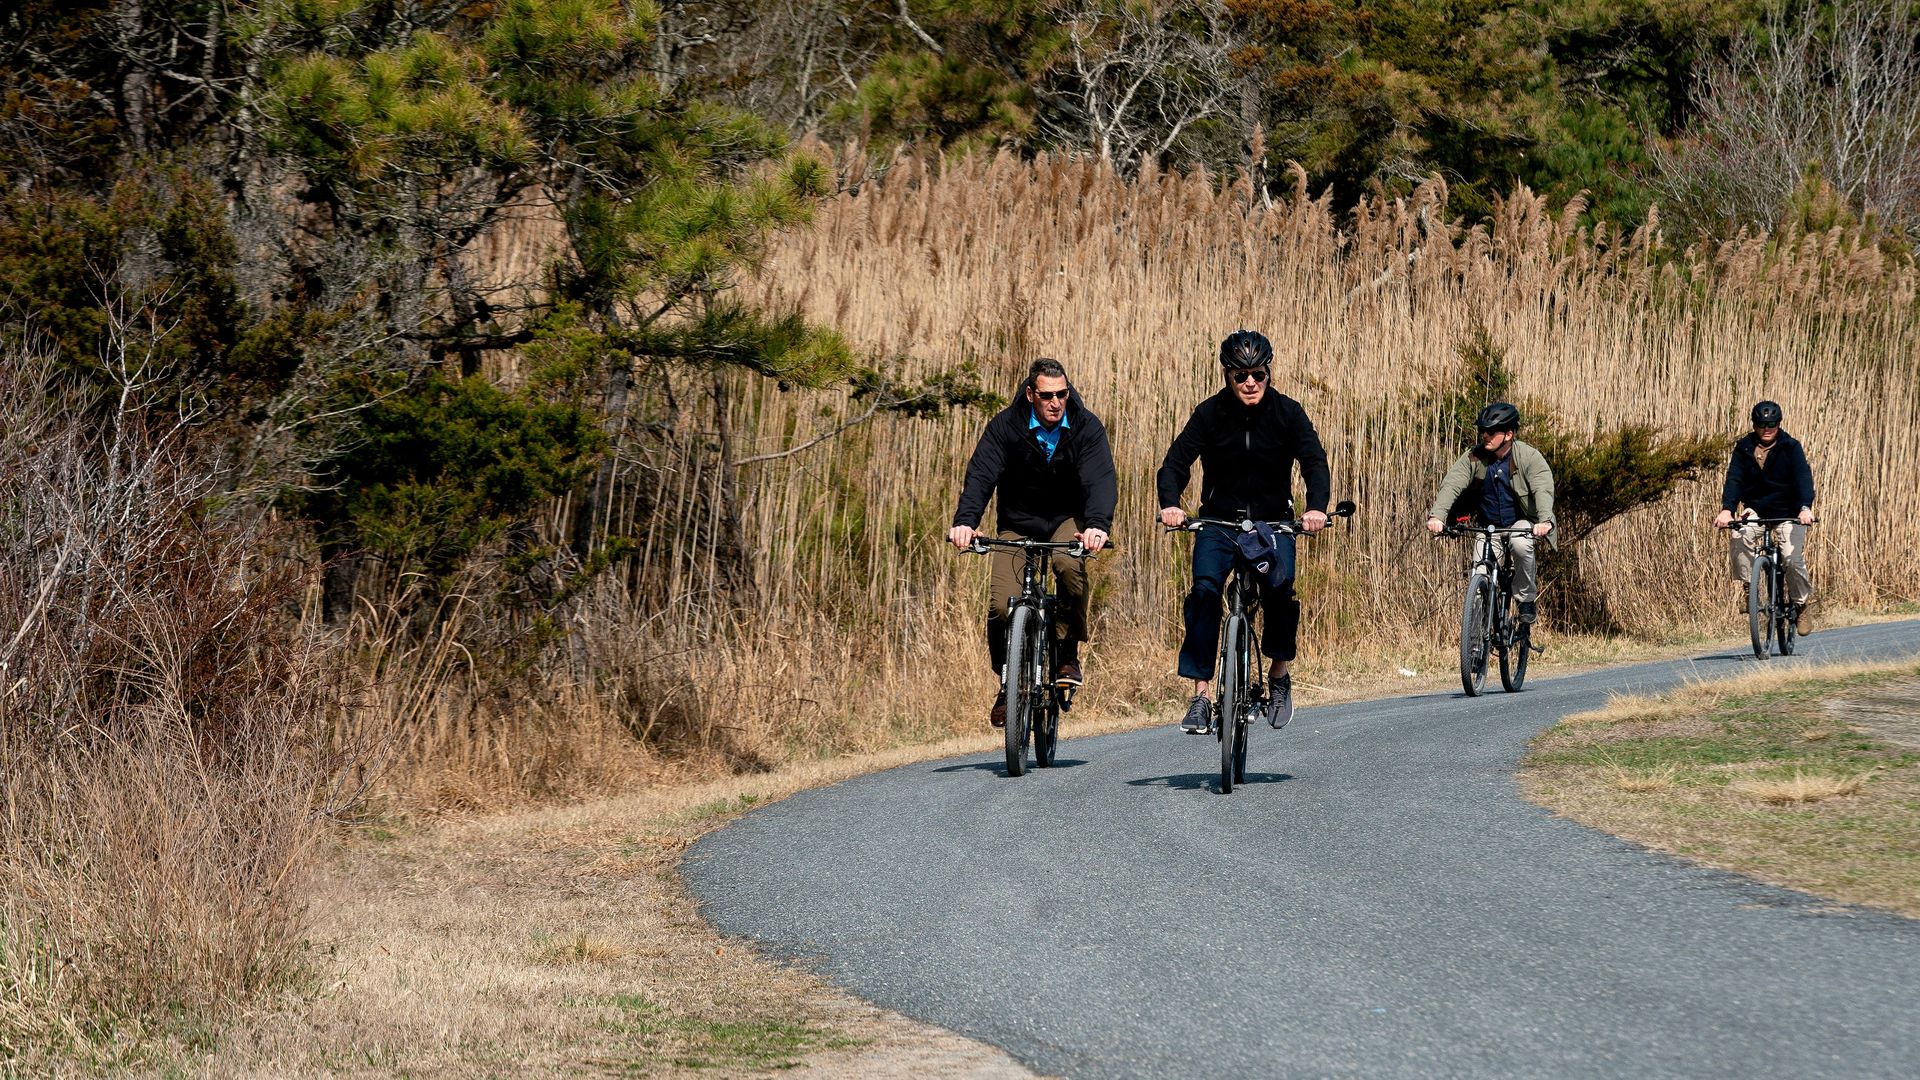 President Biden is seen during a bike ride in Rehoboth Beach, Del.